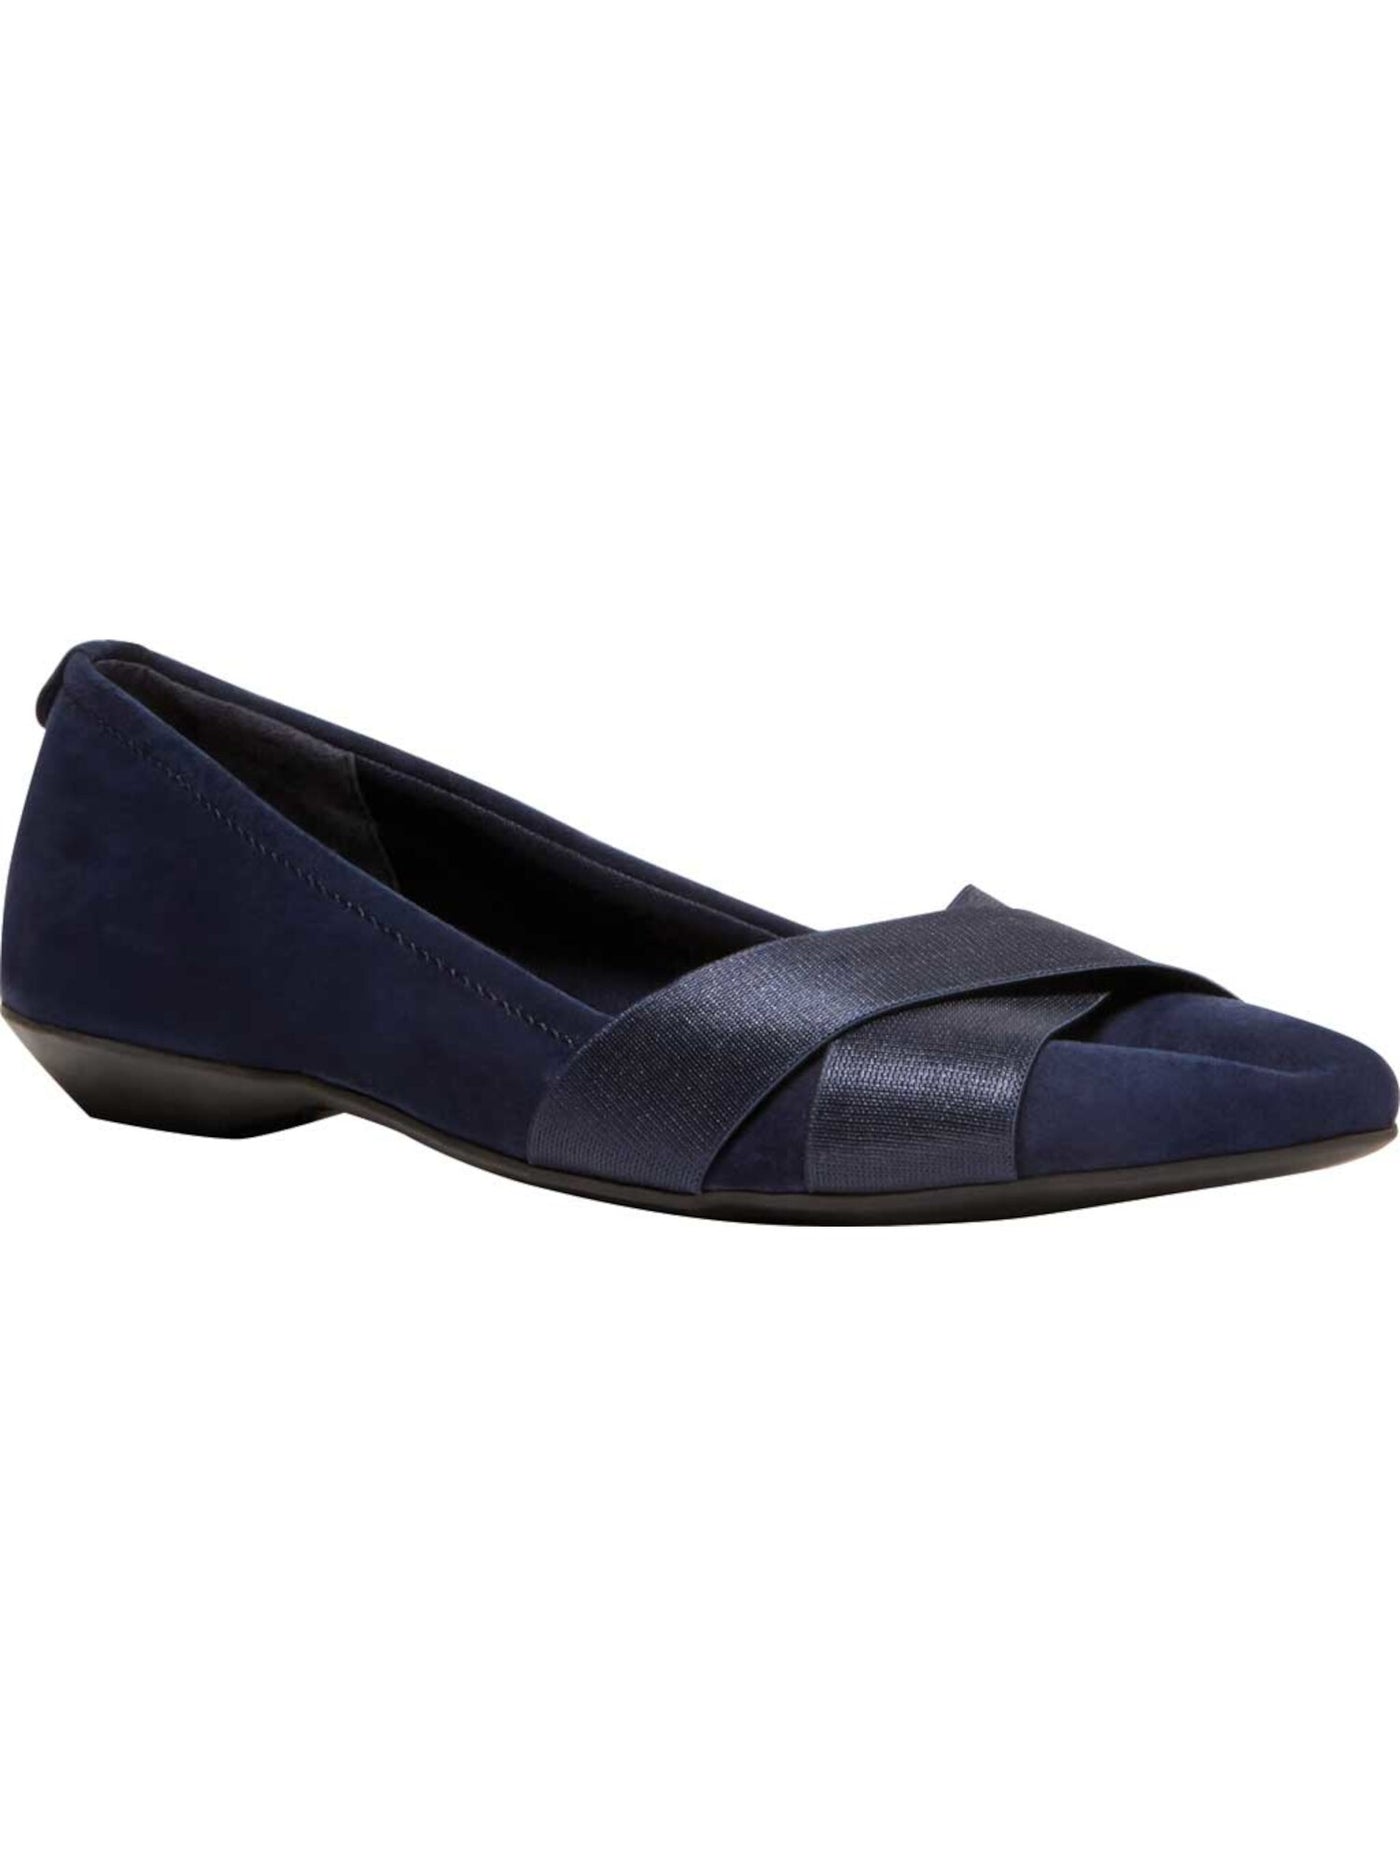 AK SPORT Womens Blue Crisscross Straps Cushioned Comfort Oalise Pointed Toe Block Heel Slip On Flats Shoes 7.5 M